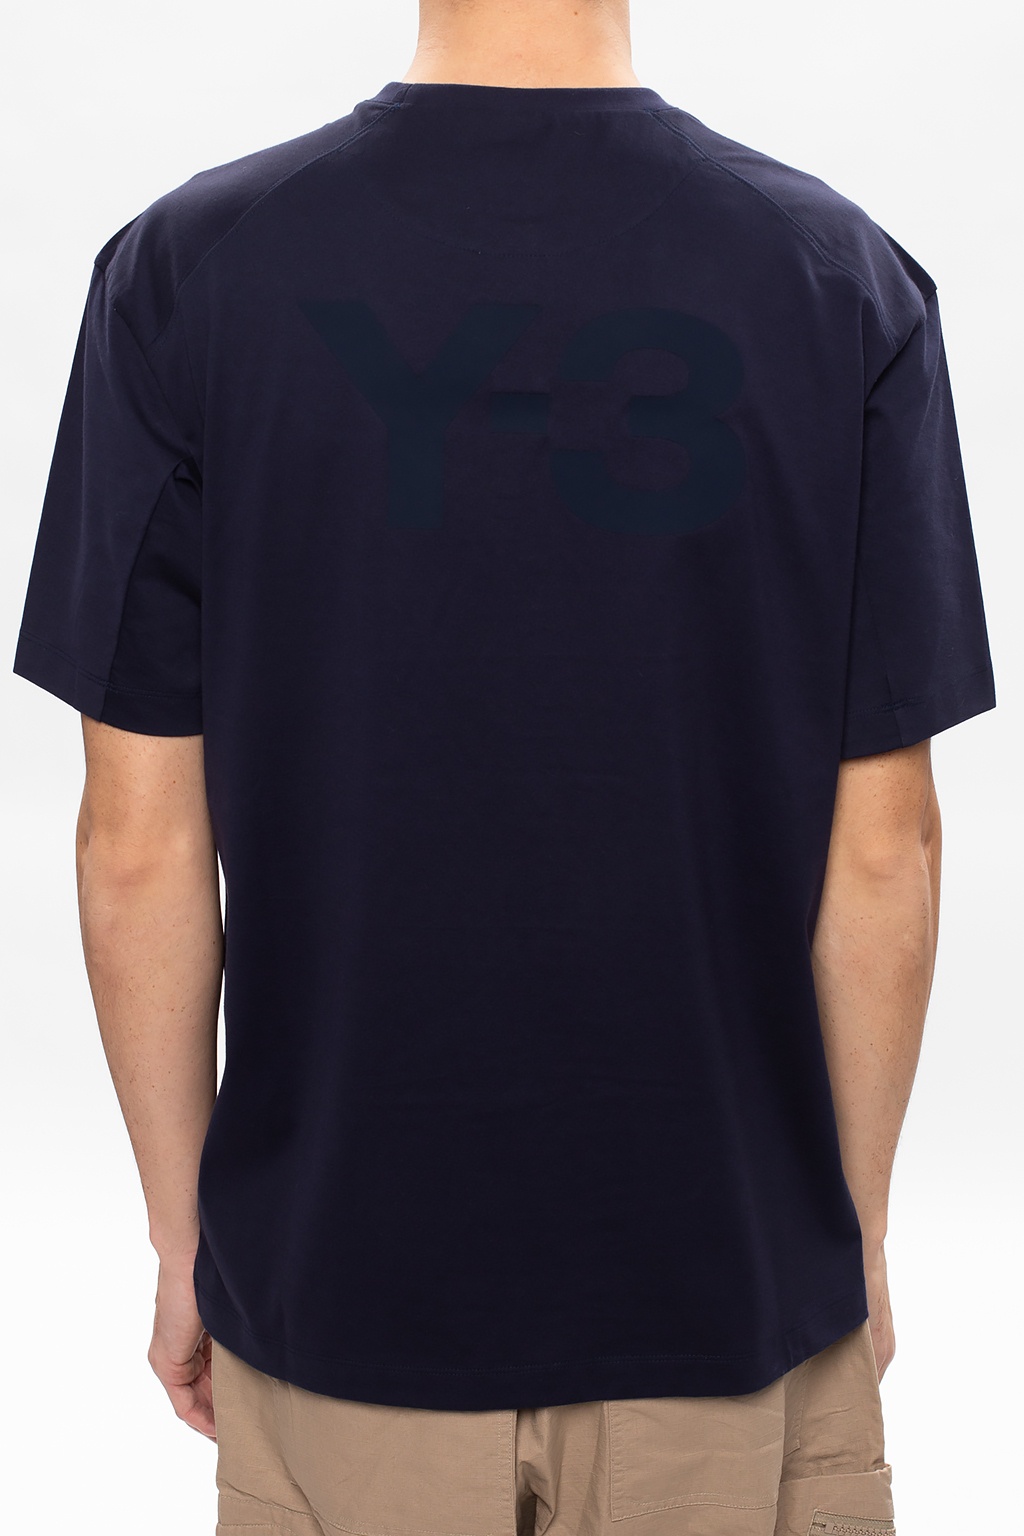 Y-3 Yohji Yamamoto Logo T-shirt